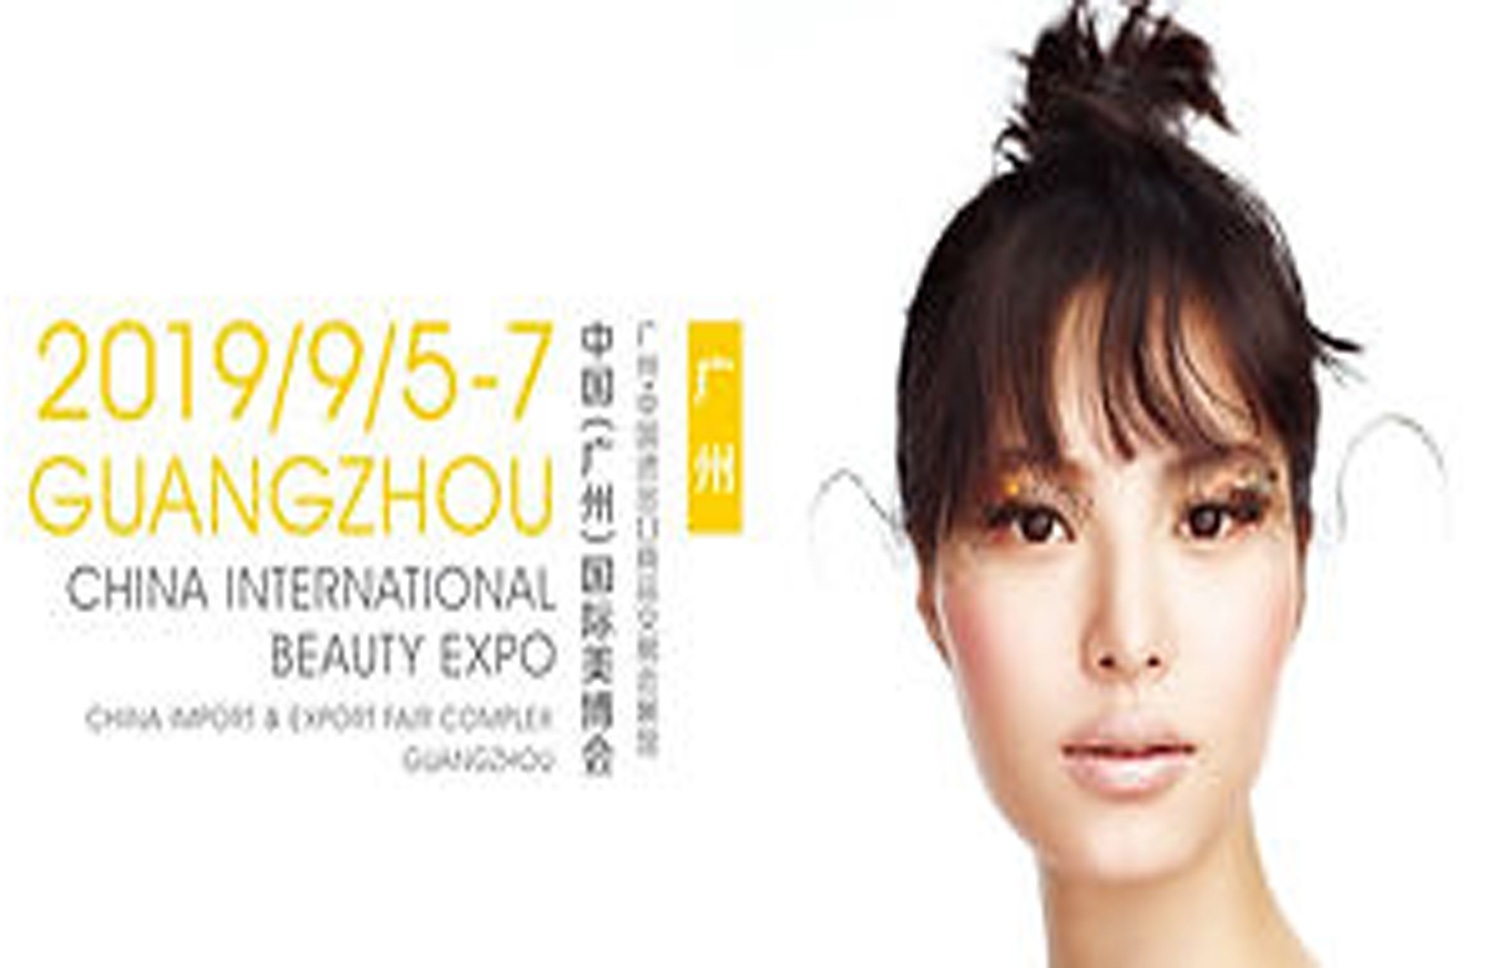 2019 China International Beauty Expo @Guangzhou